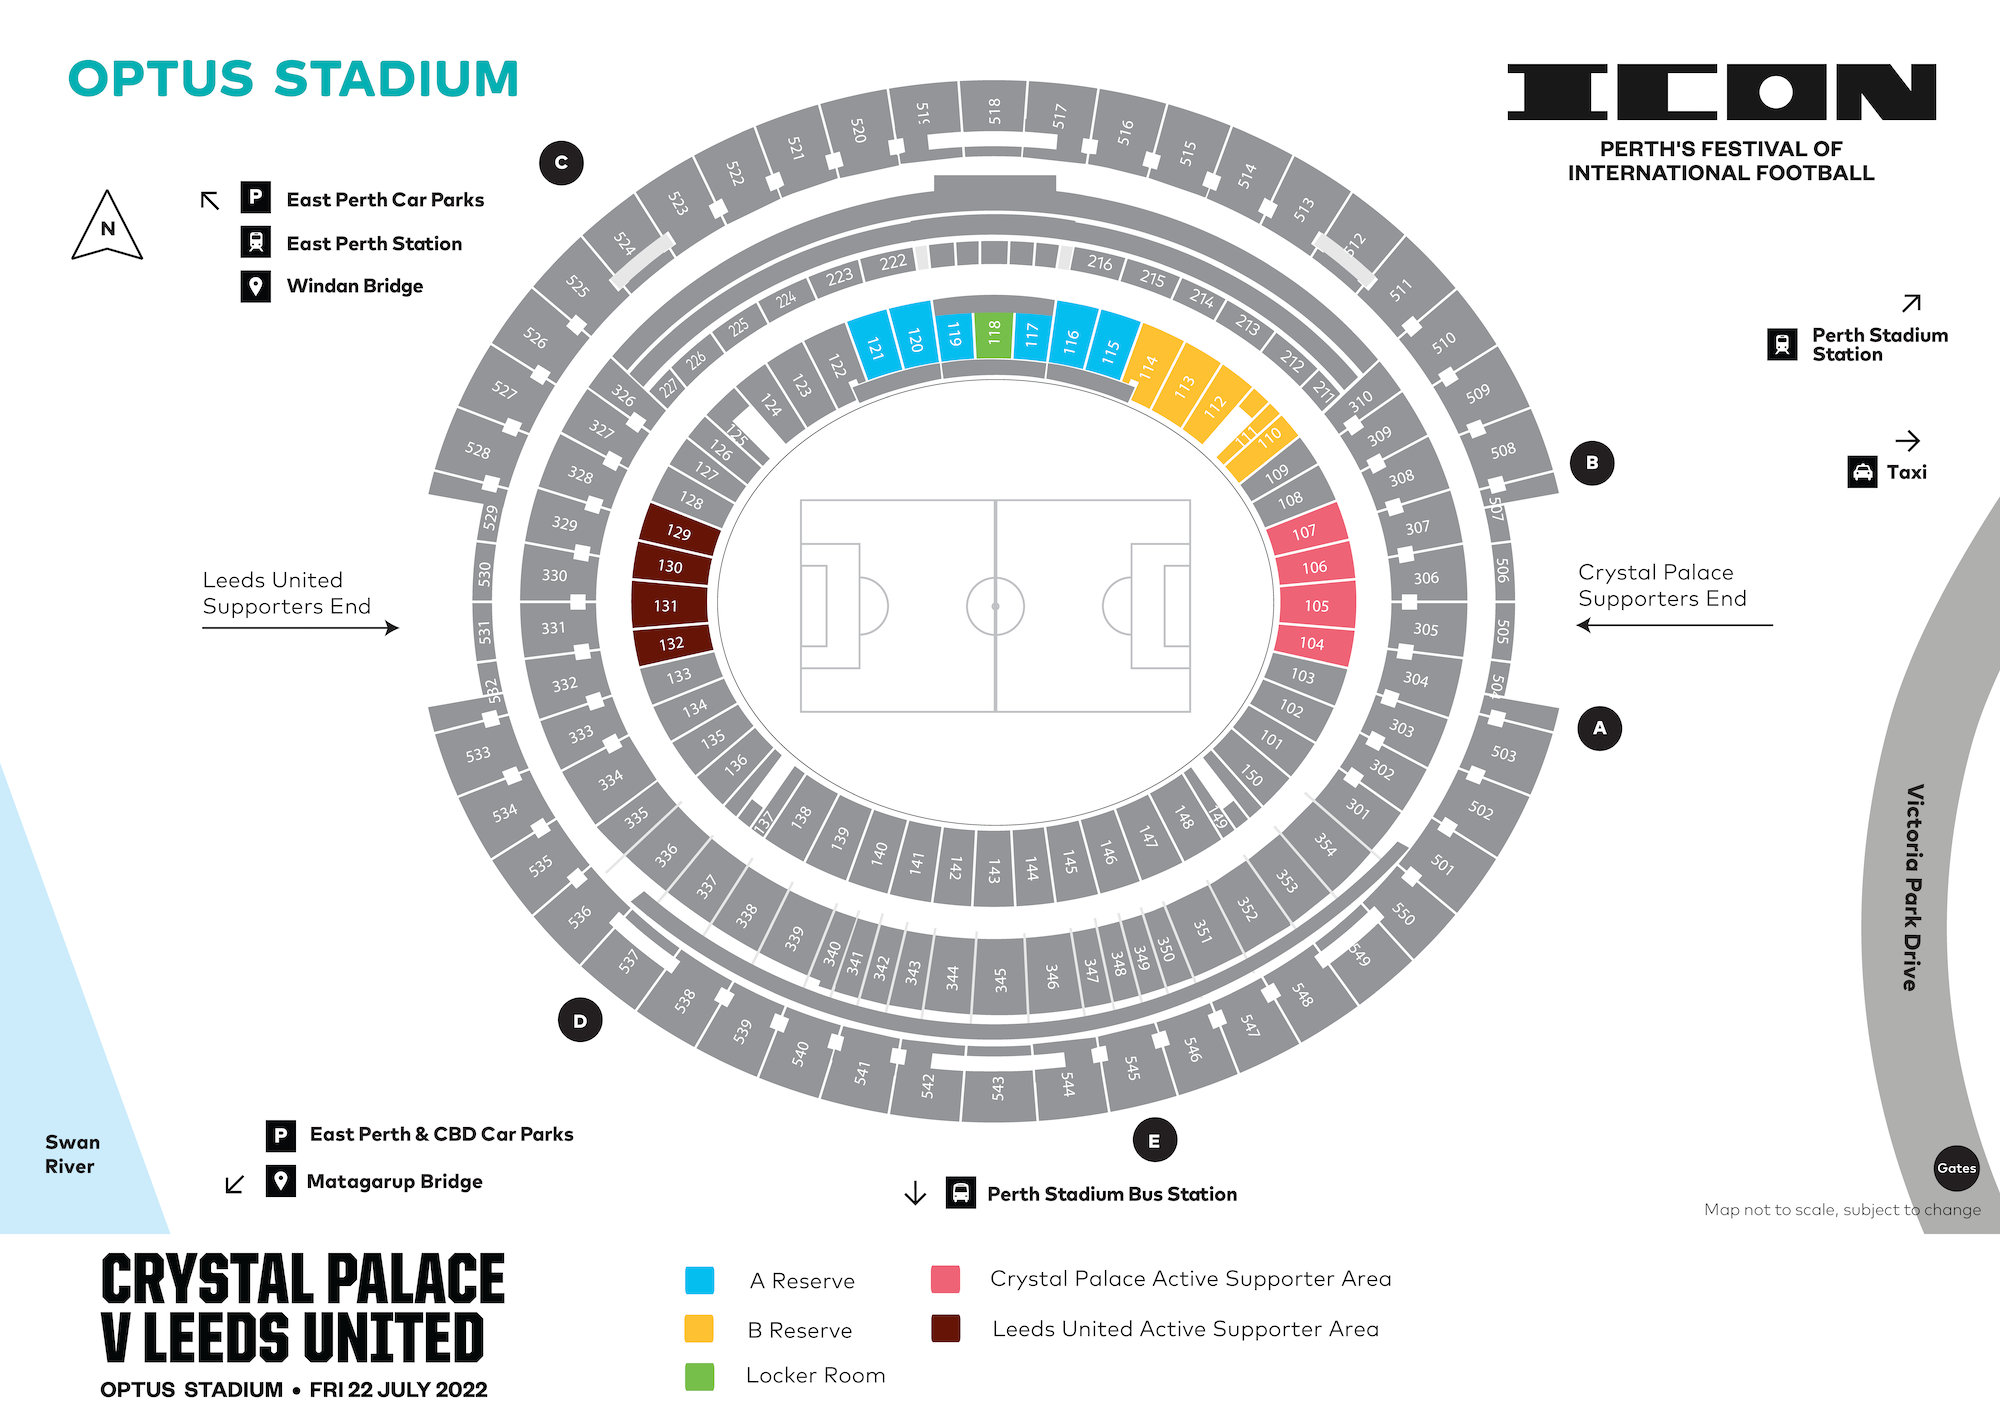 Seating map Crystal palace v Leeds United at Optus stadium